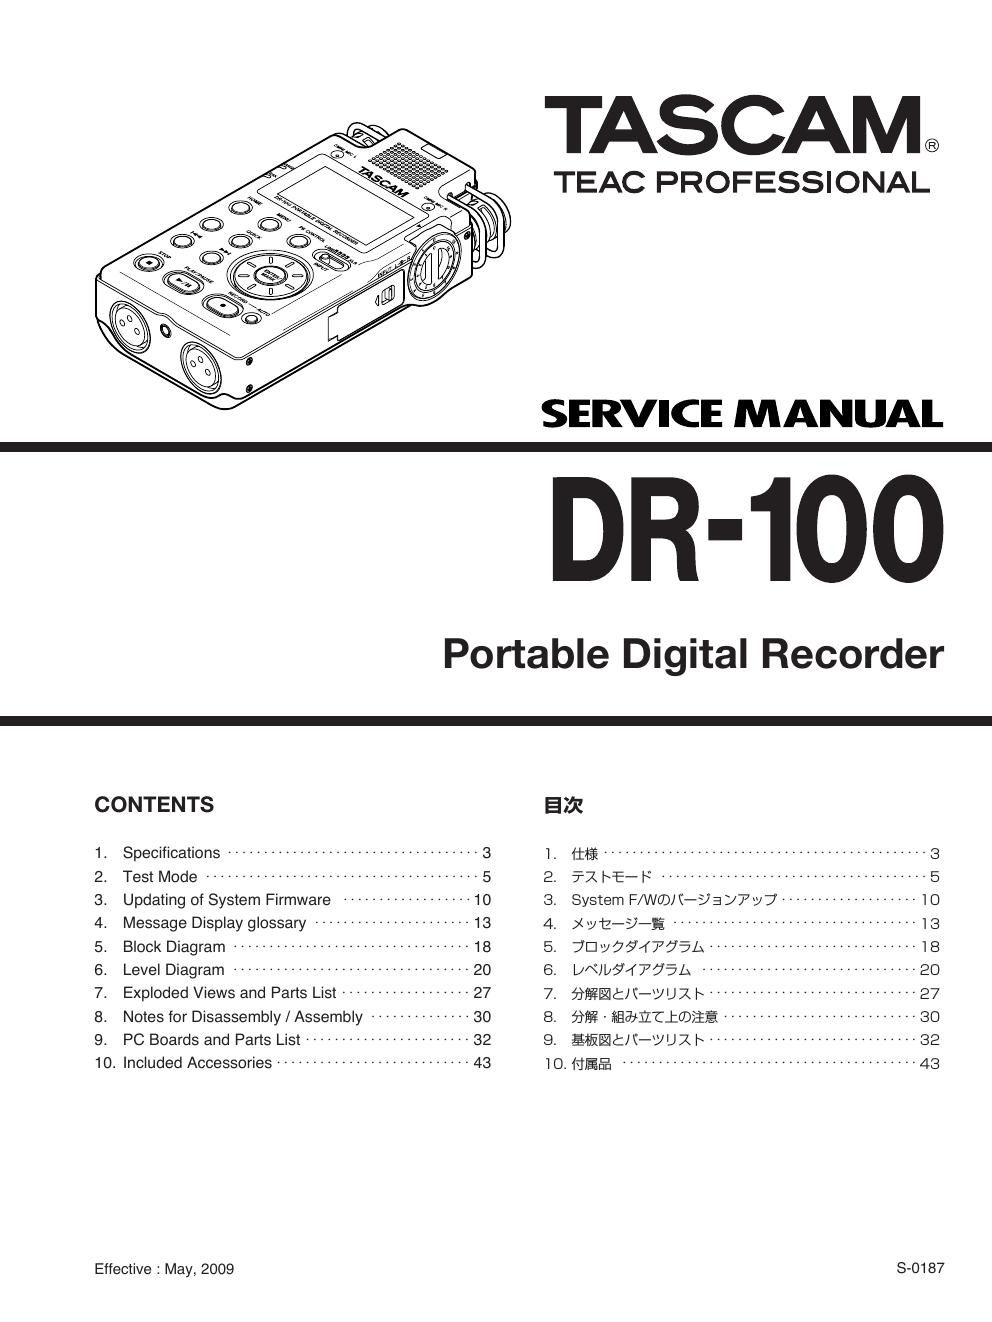 Tascam DR 100 Digital Recorder Service Manual